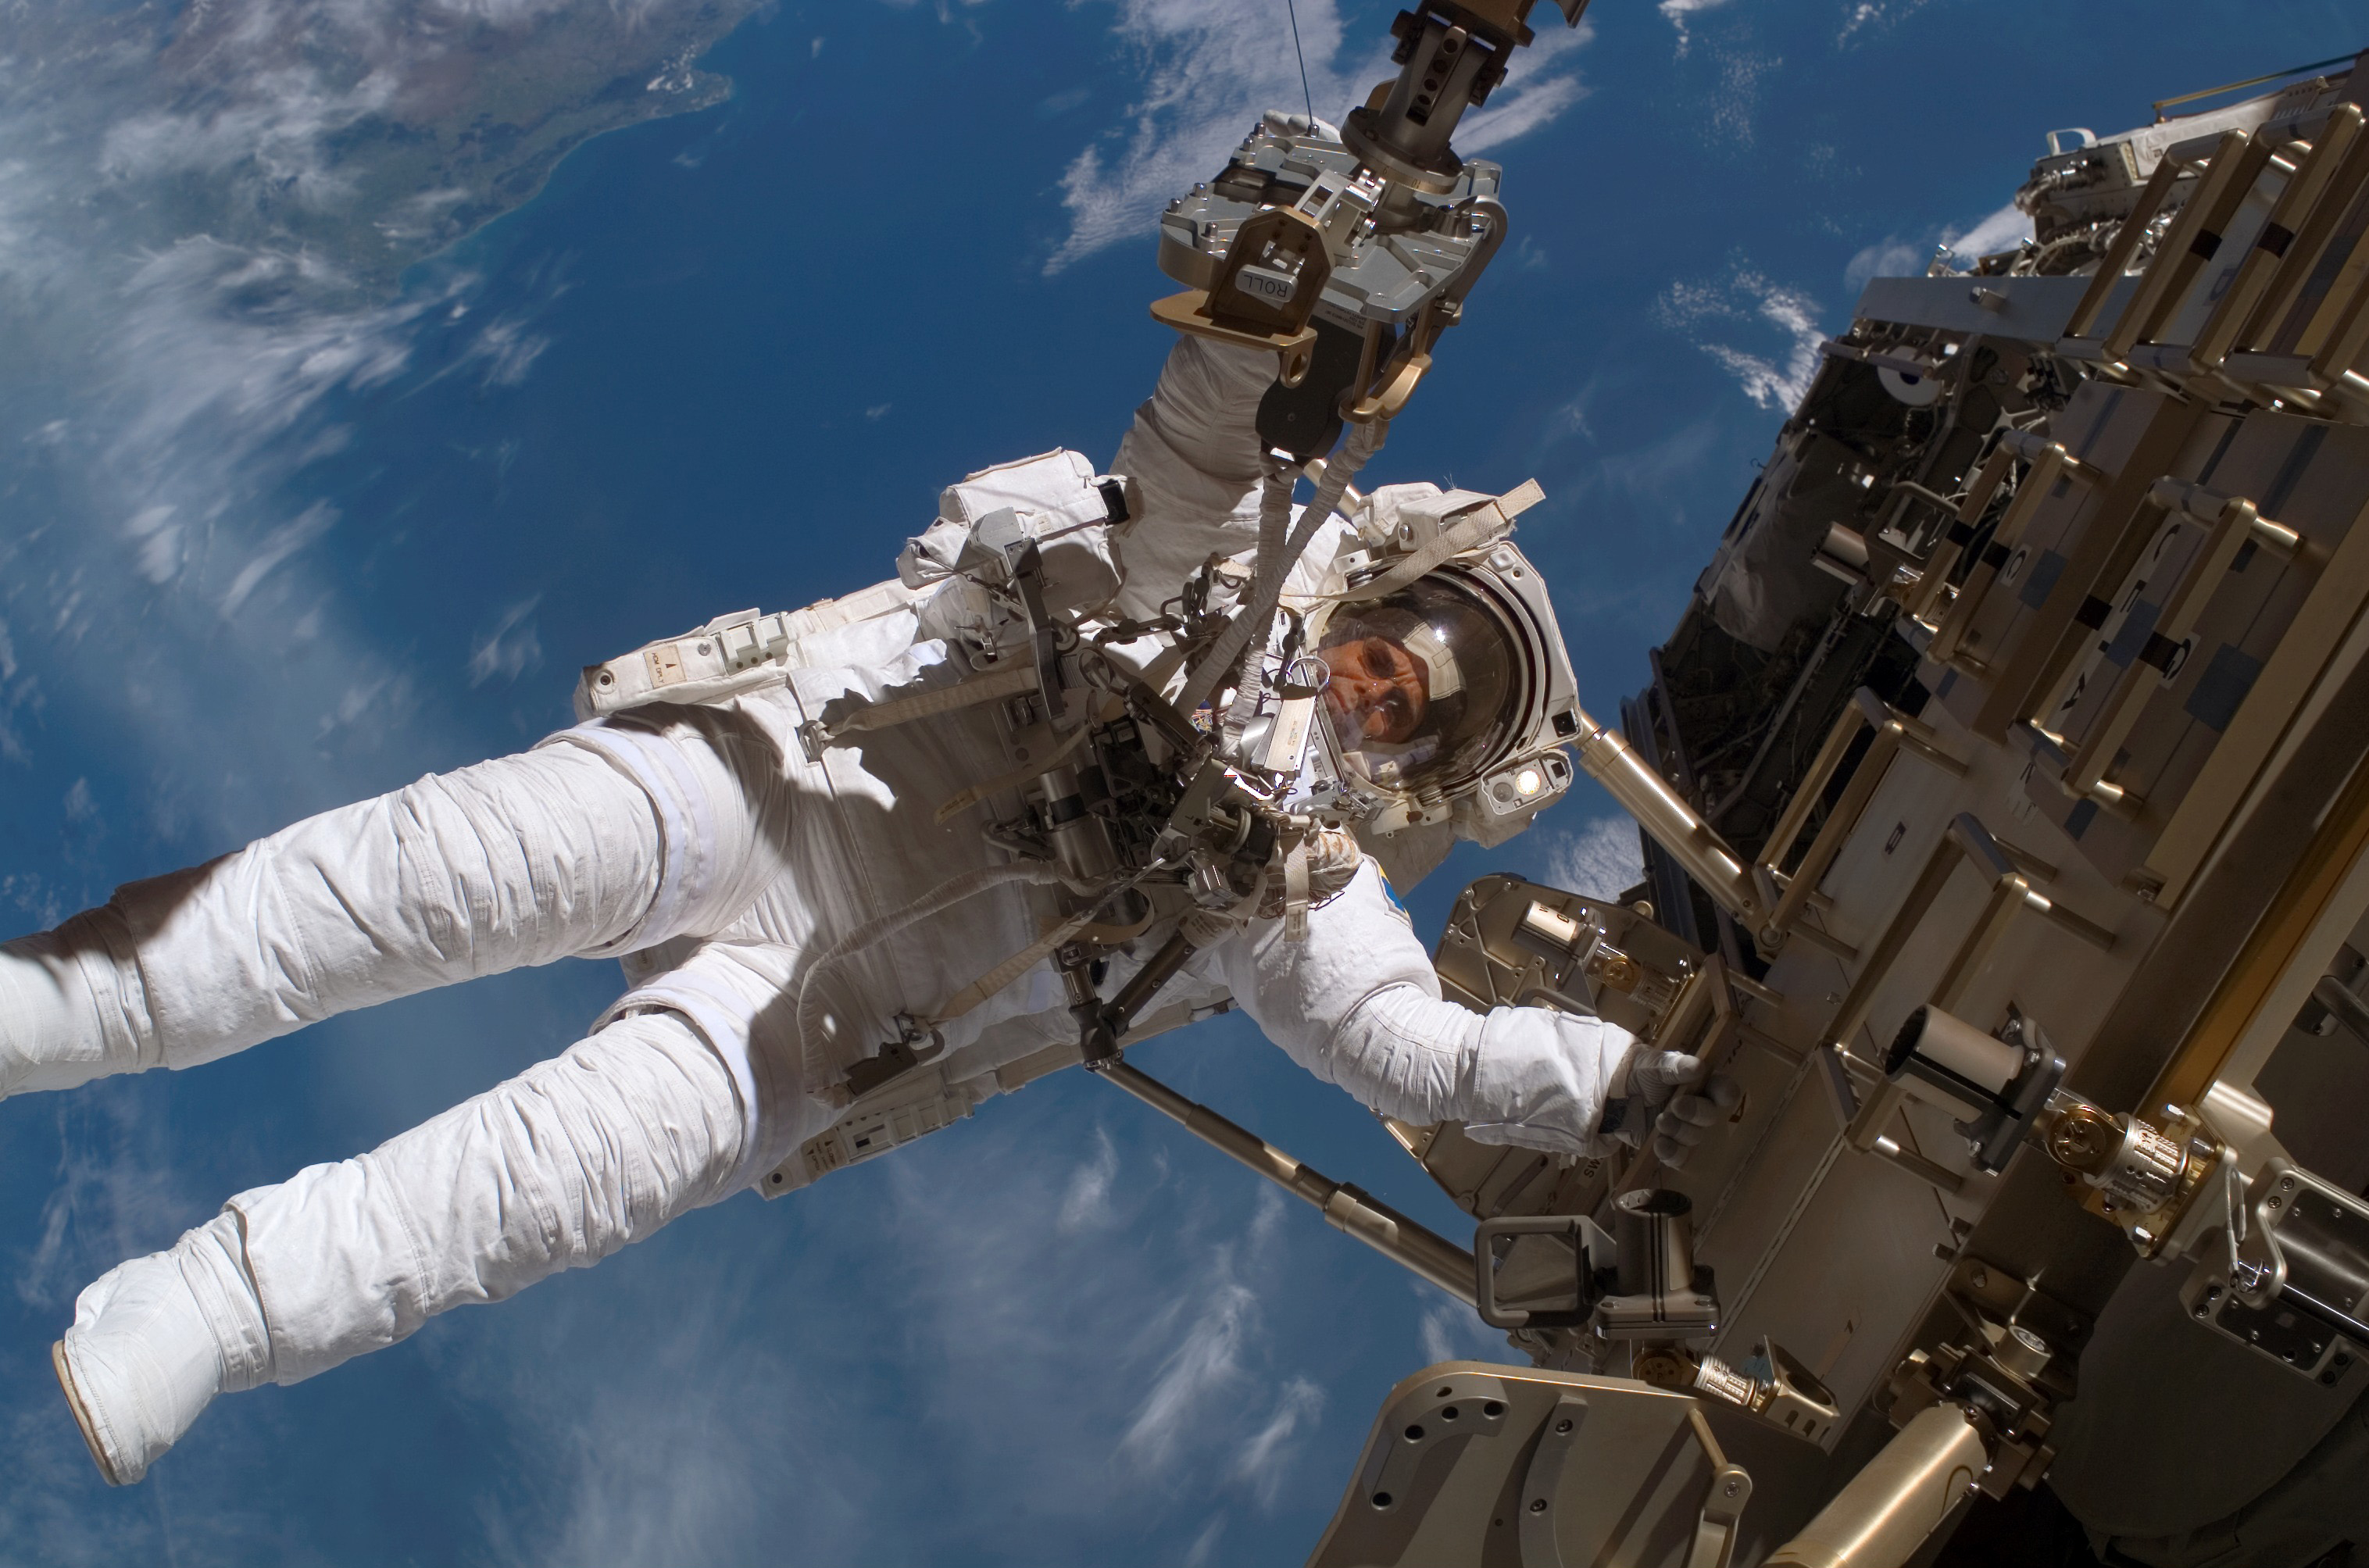 A Different View on a Spacewalk | NASA